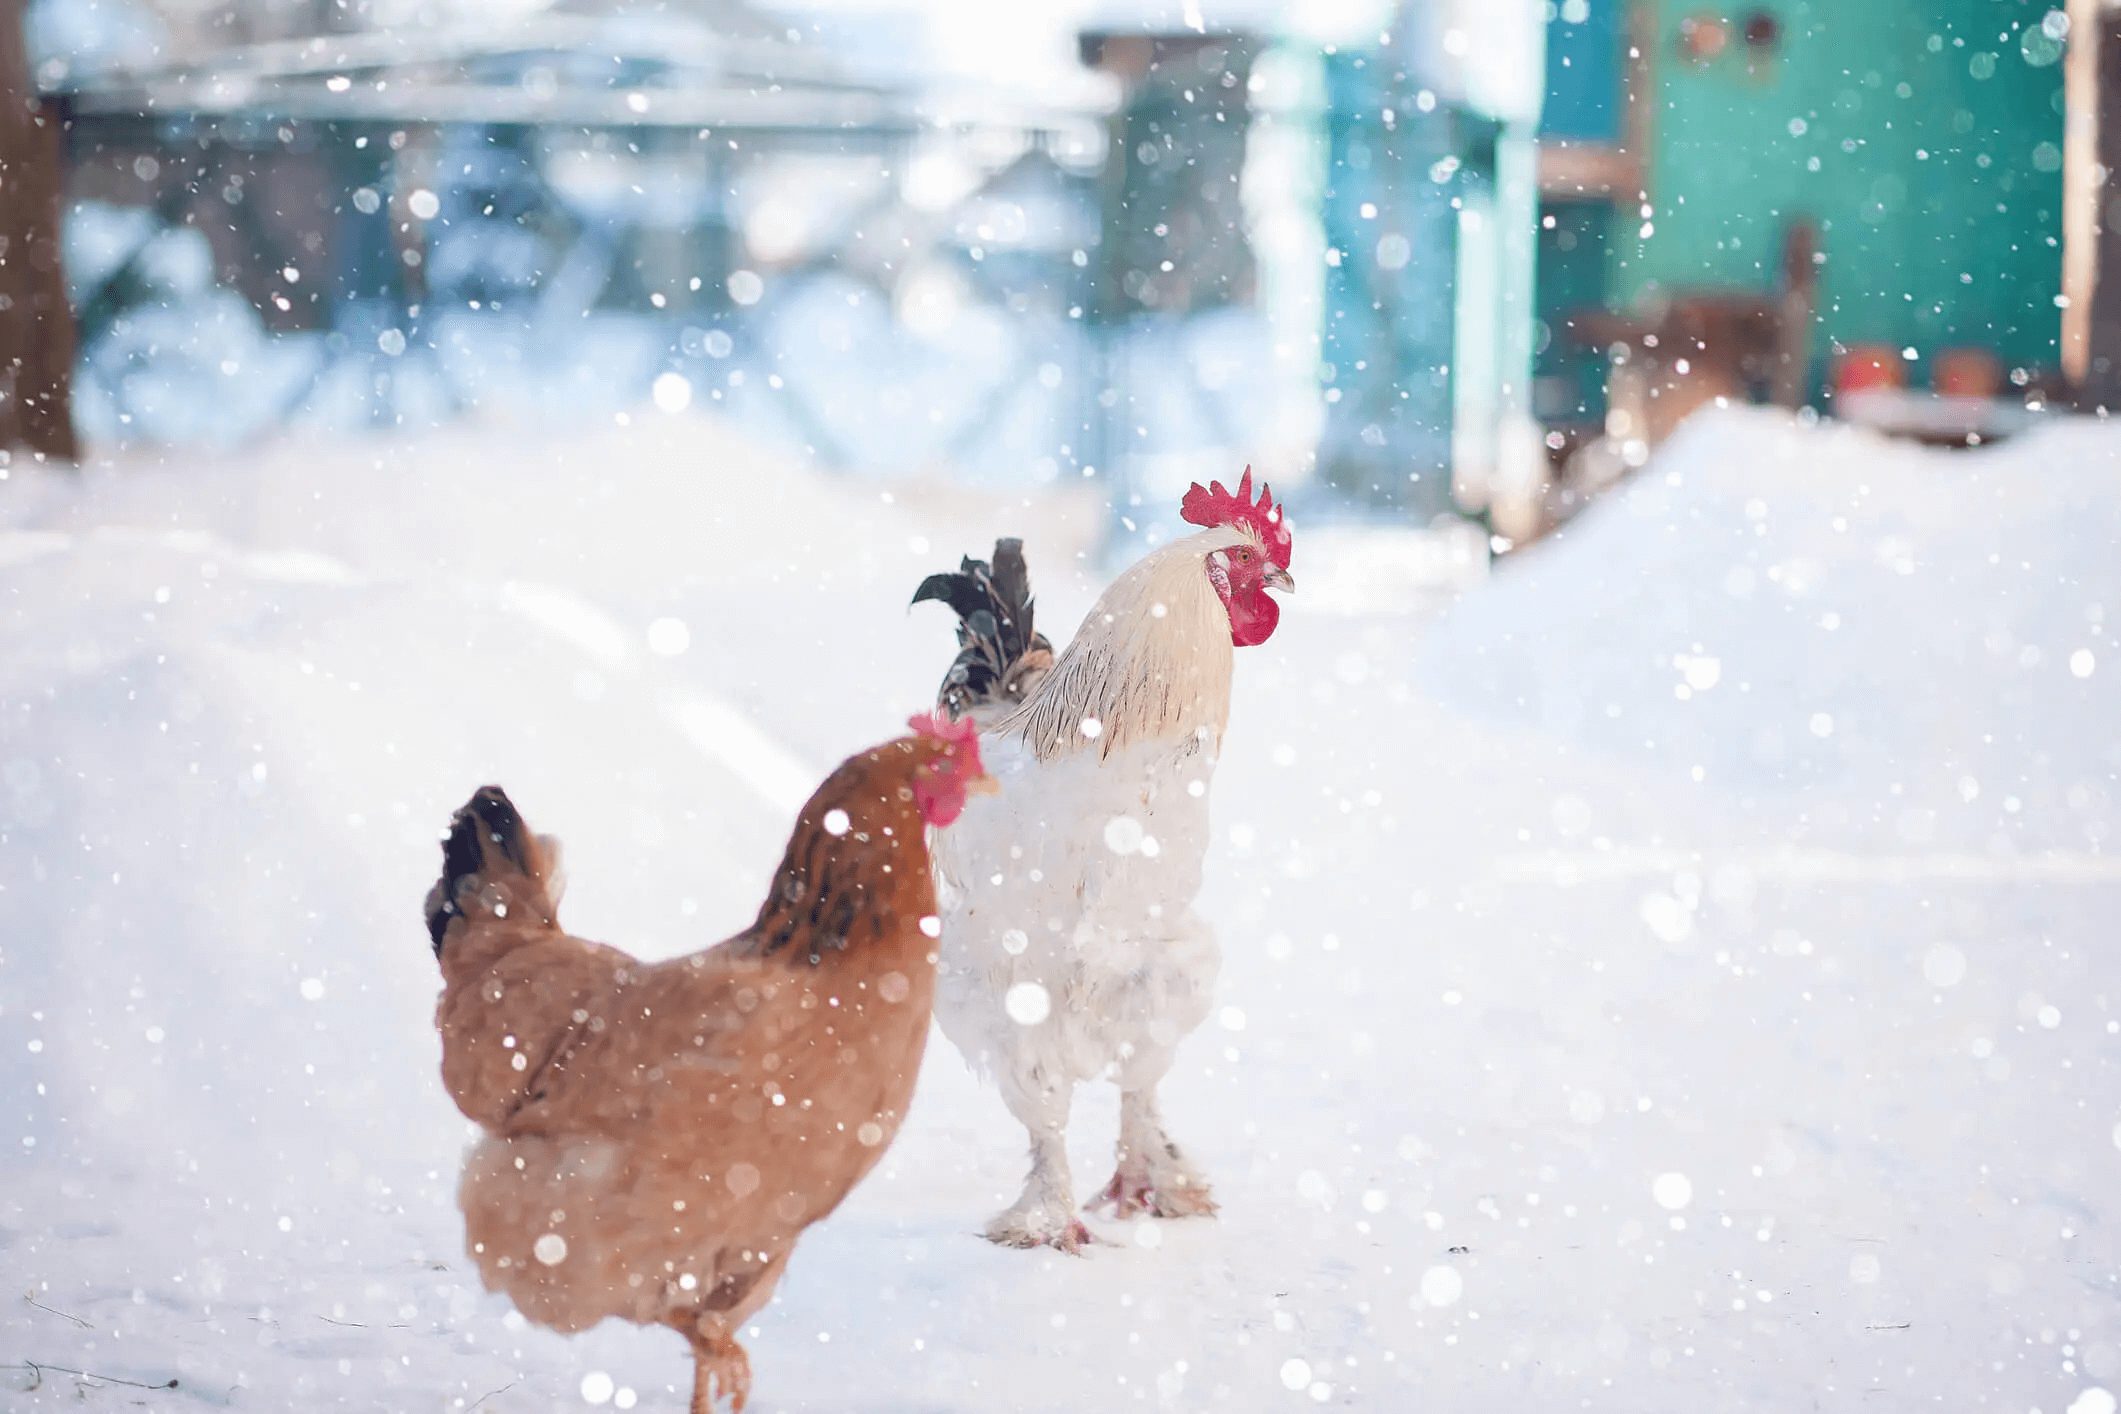 backyard chickens standing on snow